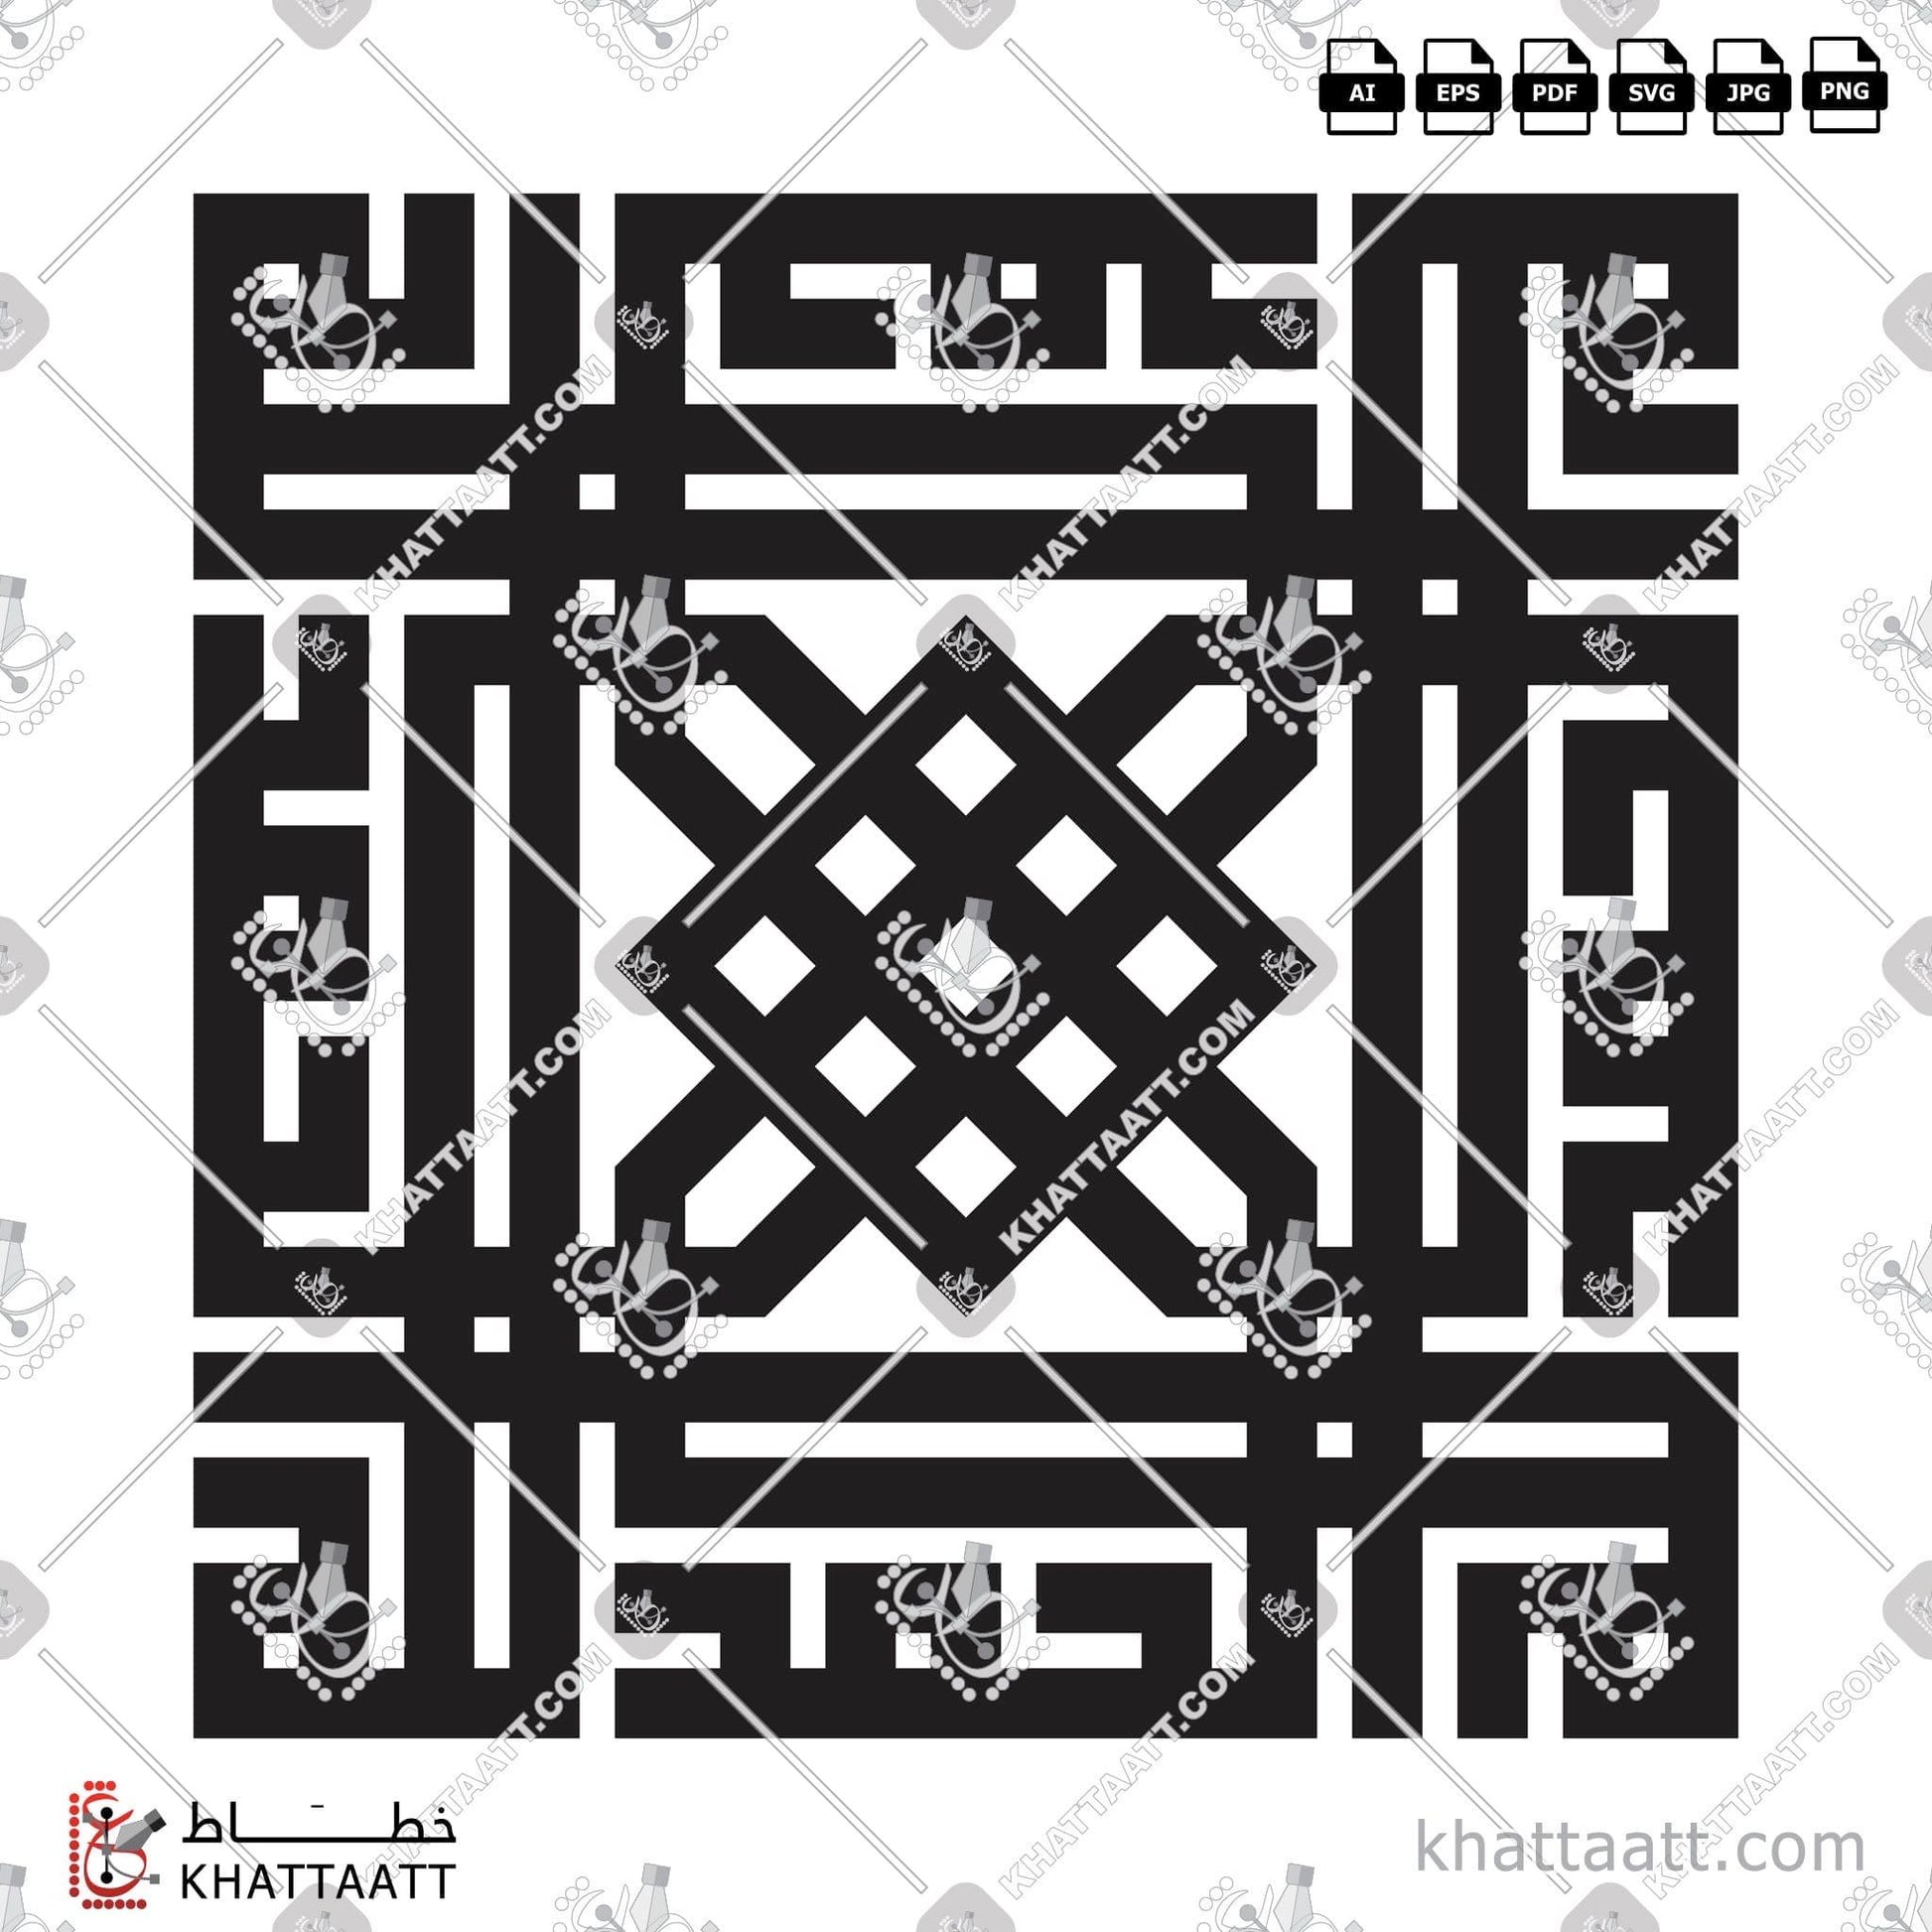 Download Arabic Calligraphy of Alhamdulillah - الحمد لله in Kufi - الخط الكوفي in vector and .png